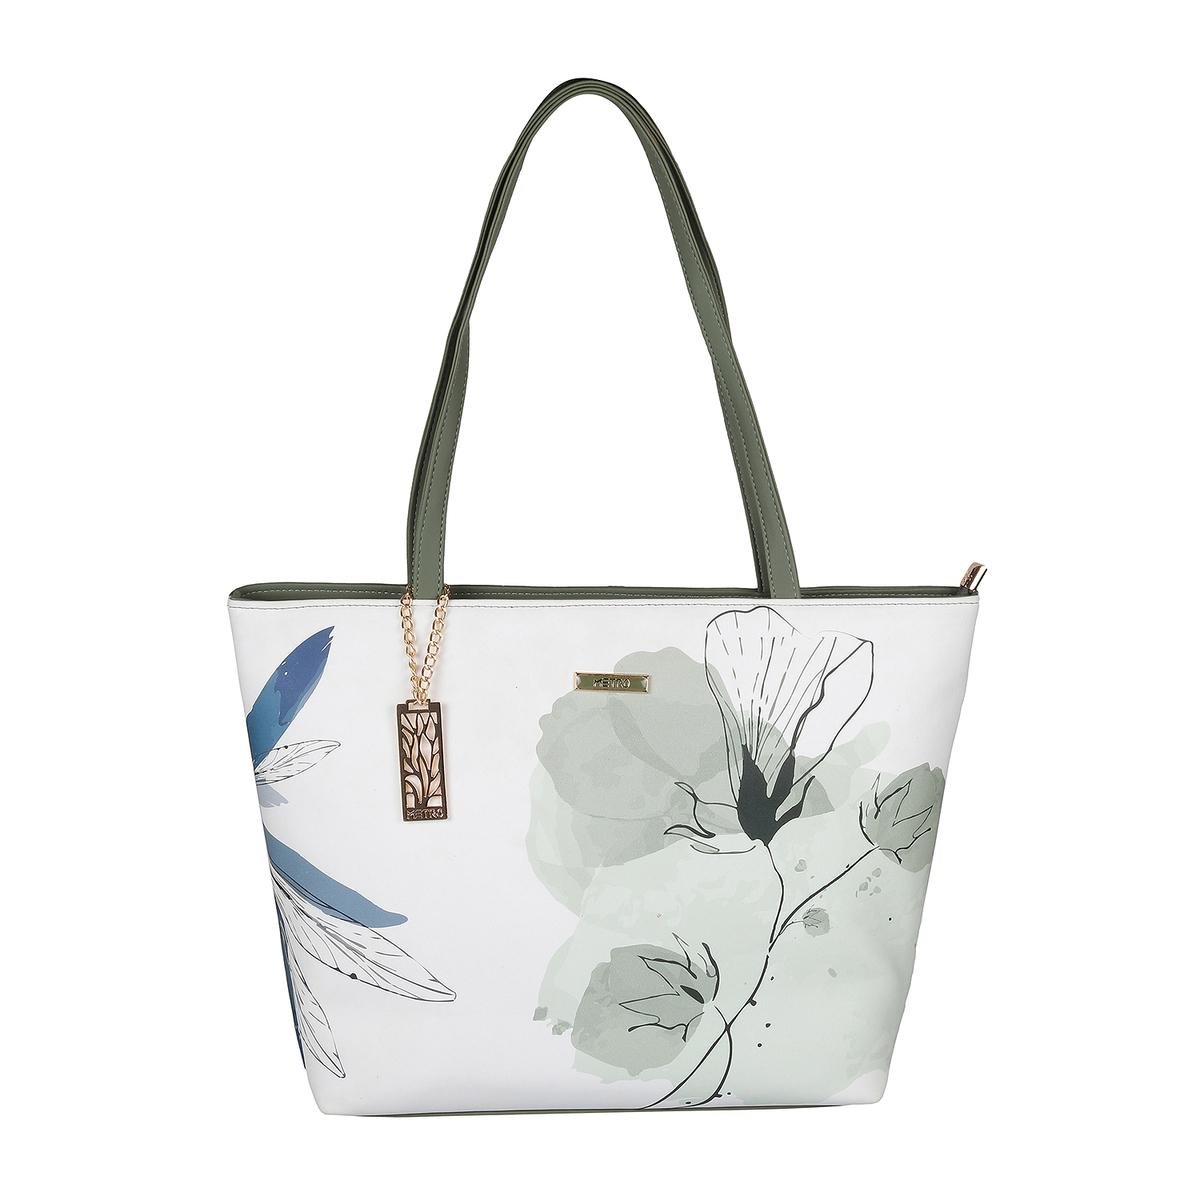 Buy Shoulder Bags, Handbags & Clutches Online Chicago | MASHALLAH